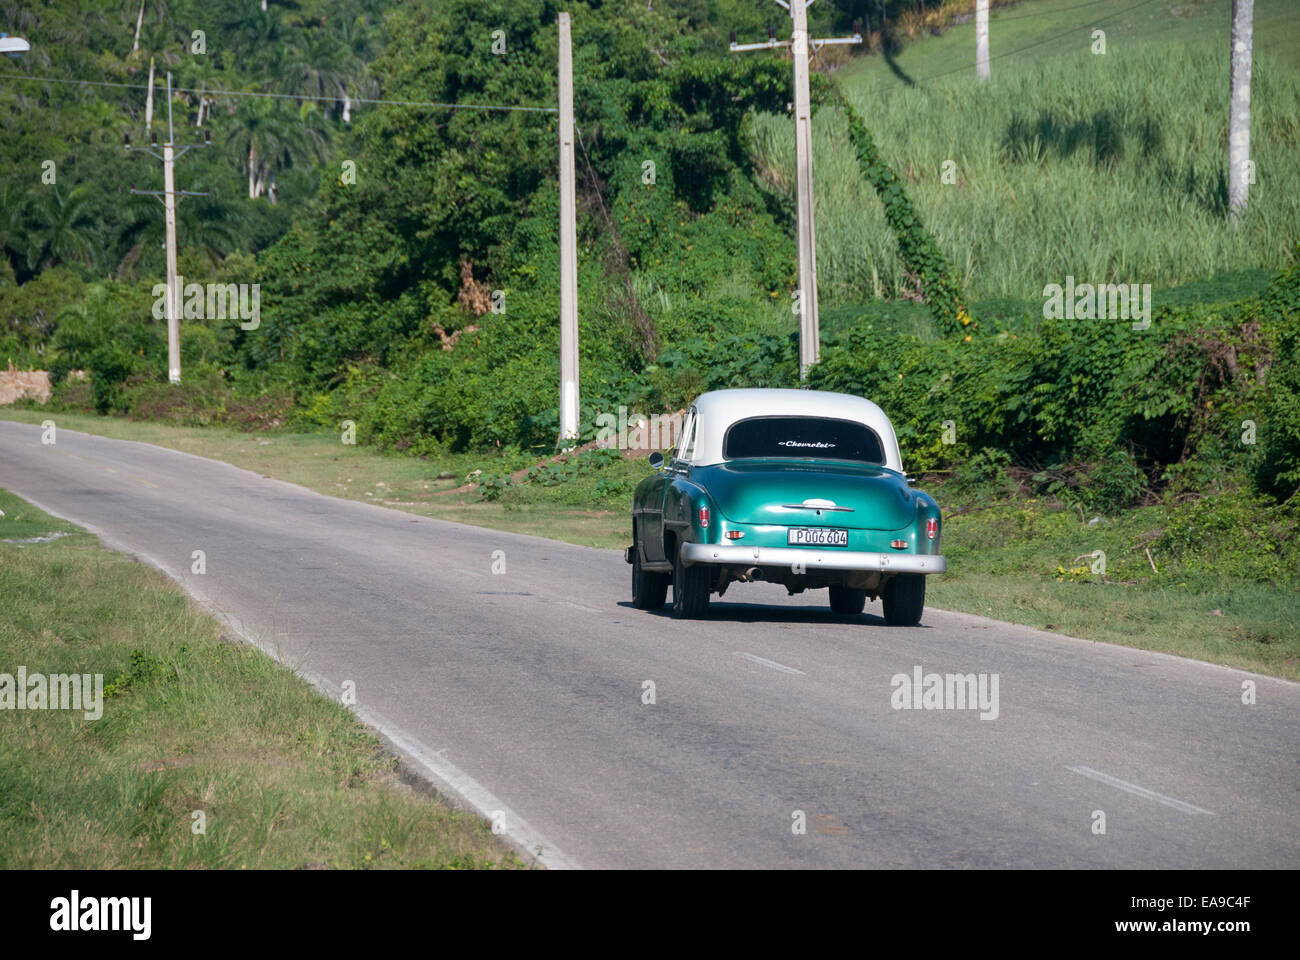 A vintage American car used as a taxi travels down a rural road near Jibacoa Cuba Stock Photo